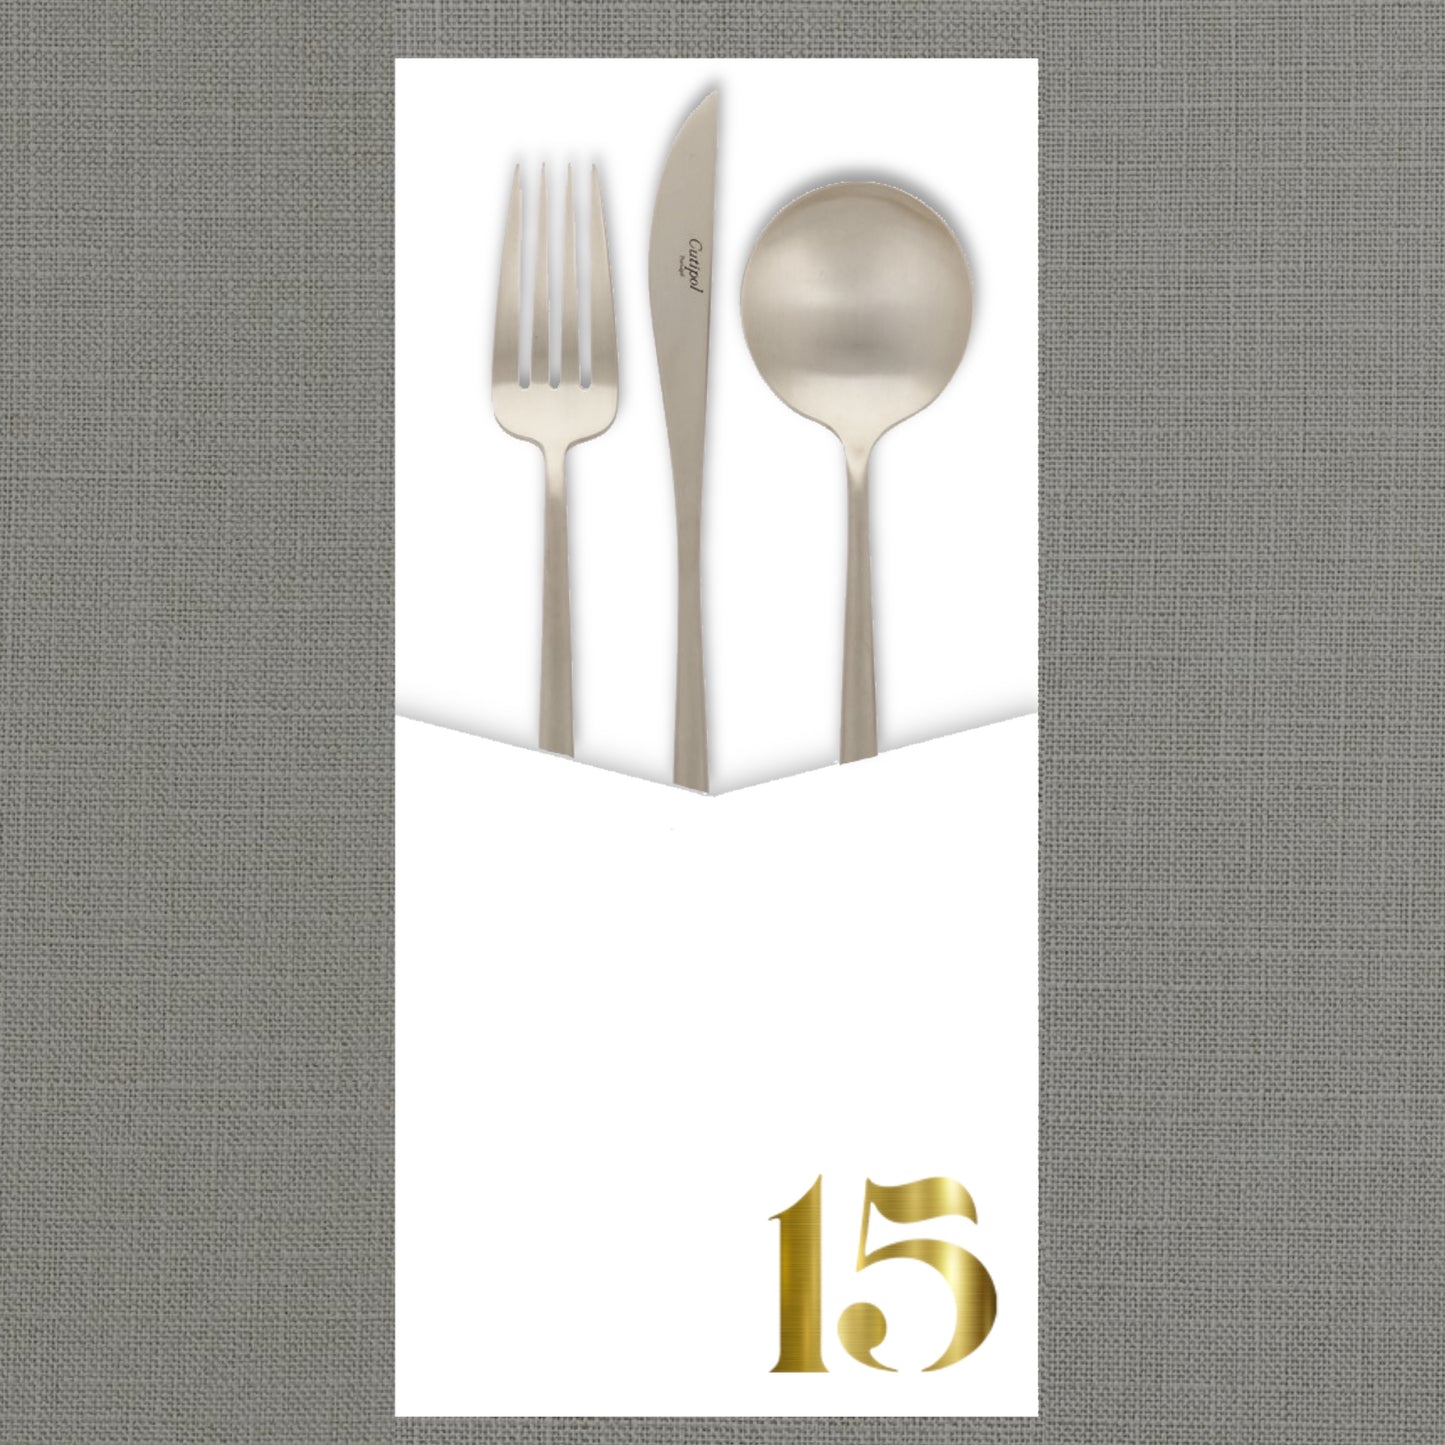 Foil Celebrate! 15 - Cutlery Pouch